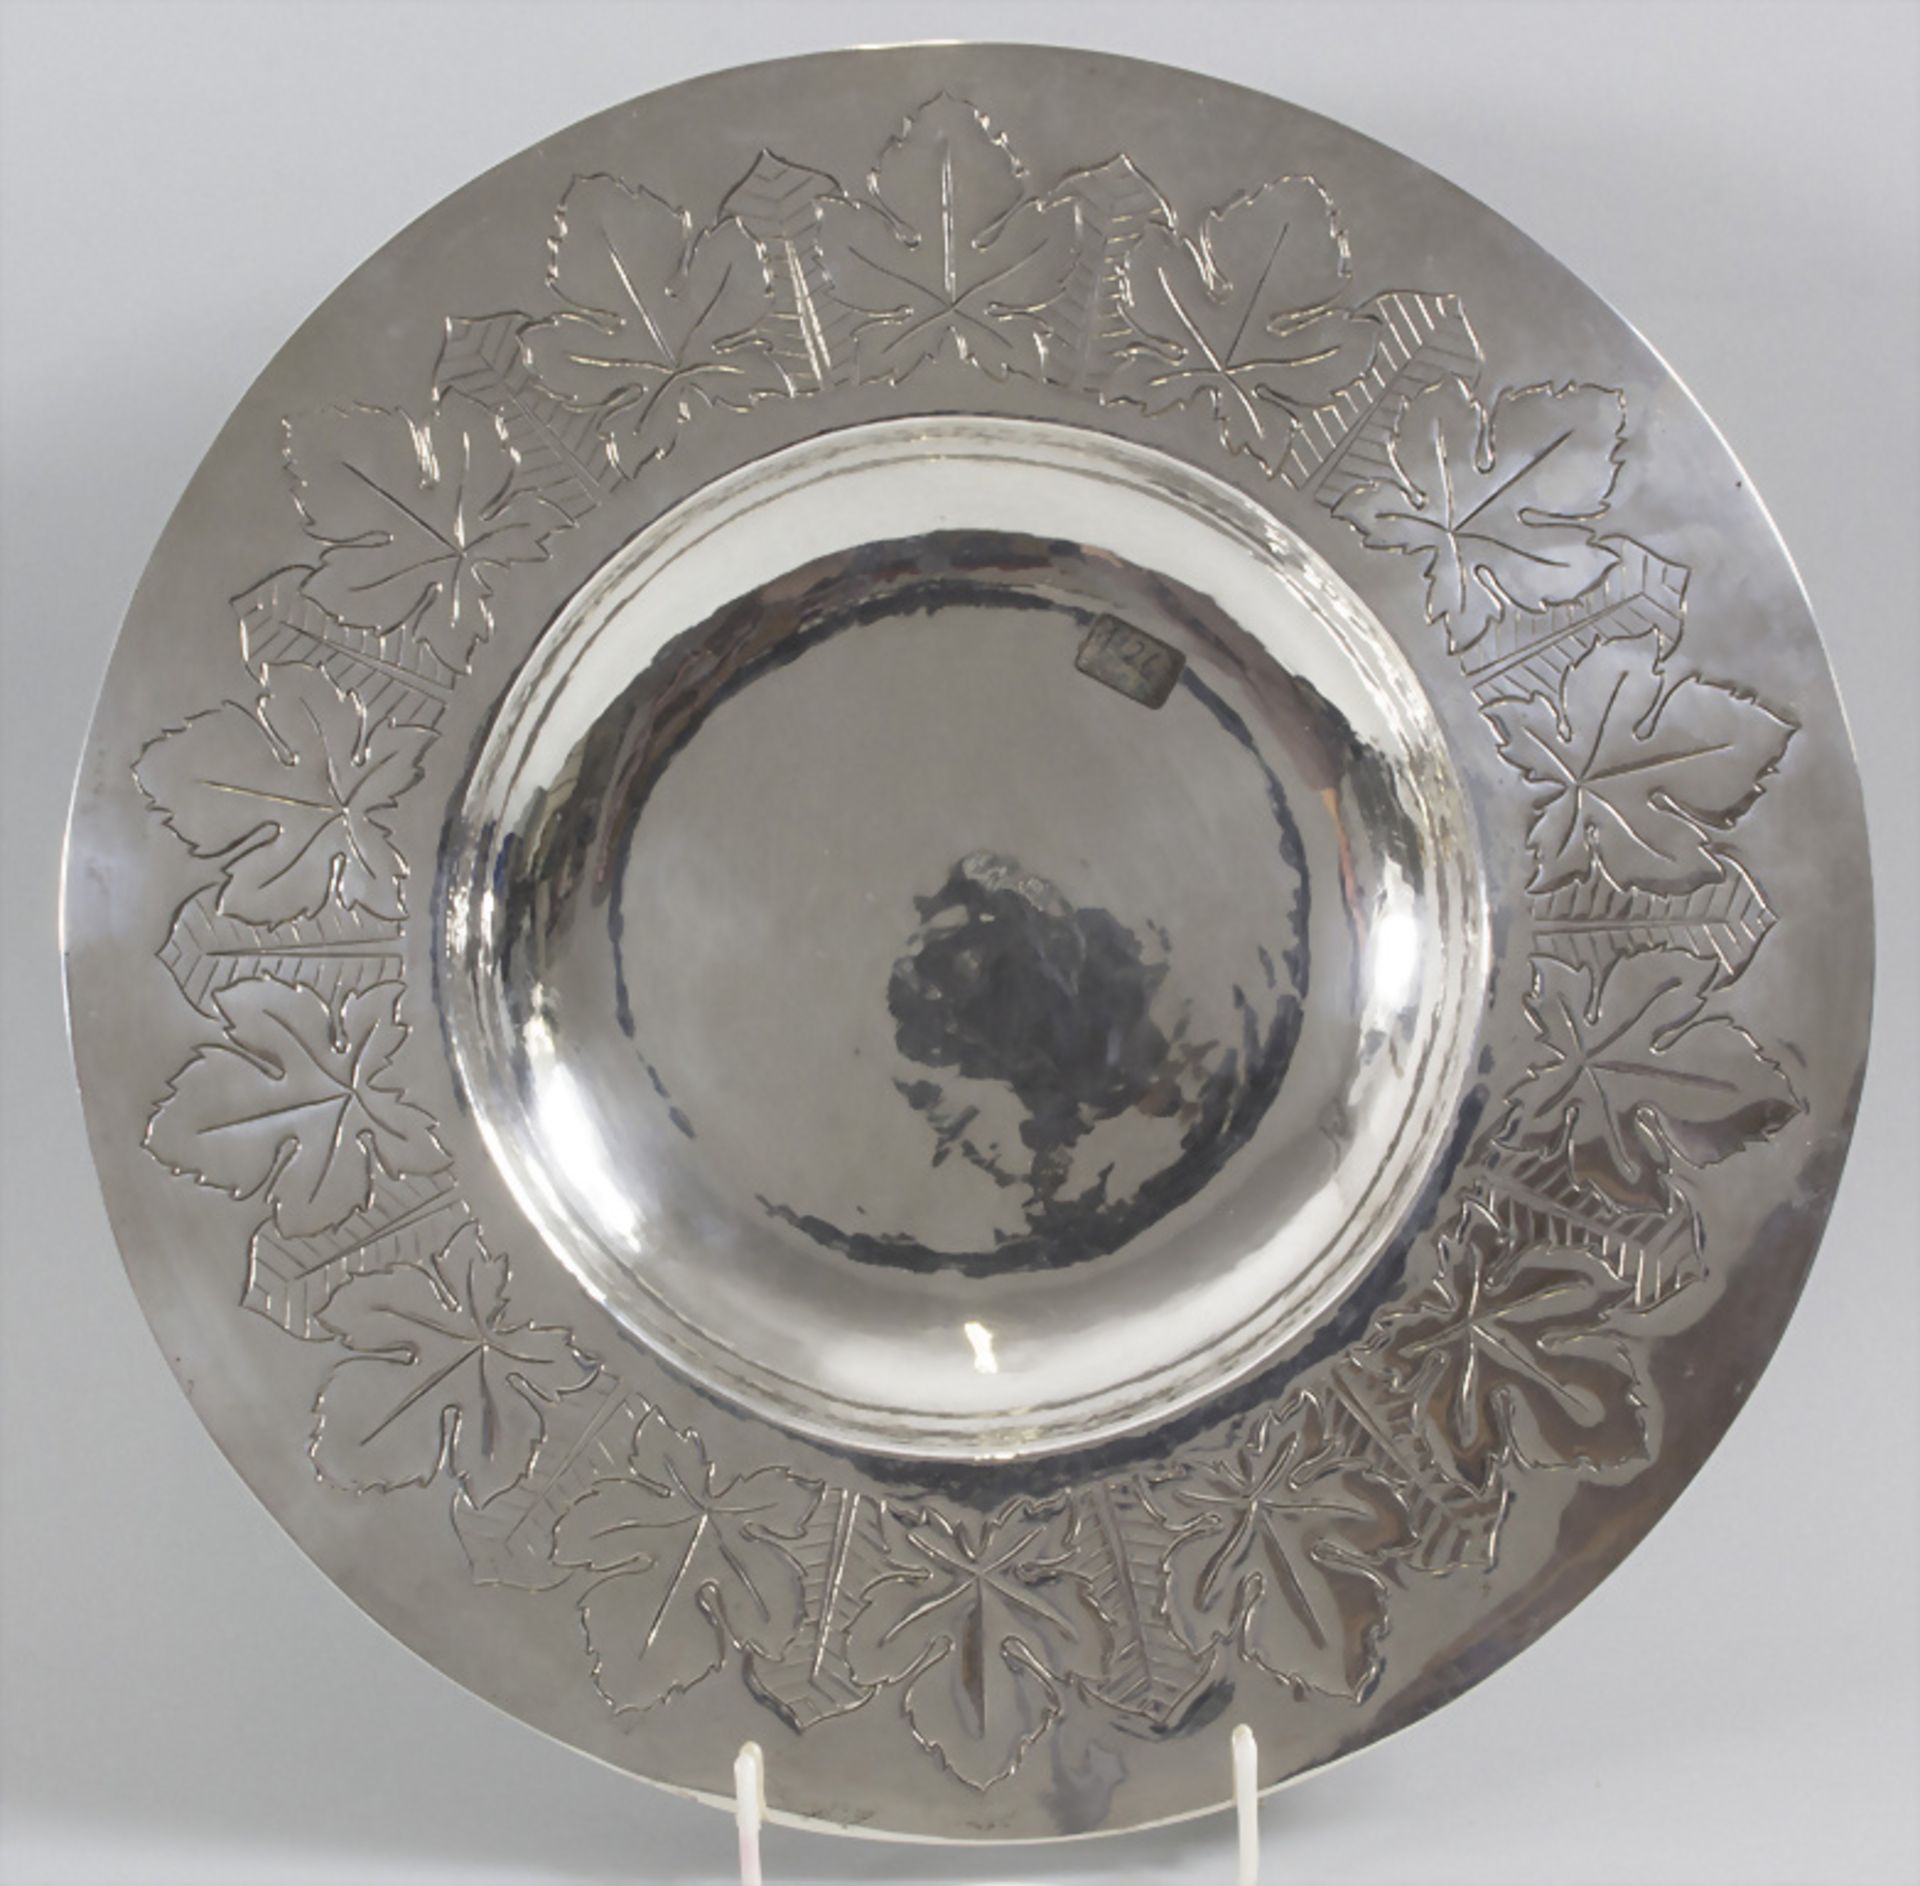 Große Platte / Plat en argent massif / A silver plate, Georg Czauderna, Berlin, 1930-1960